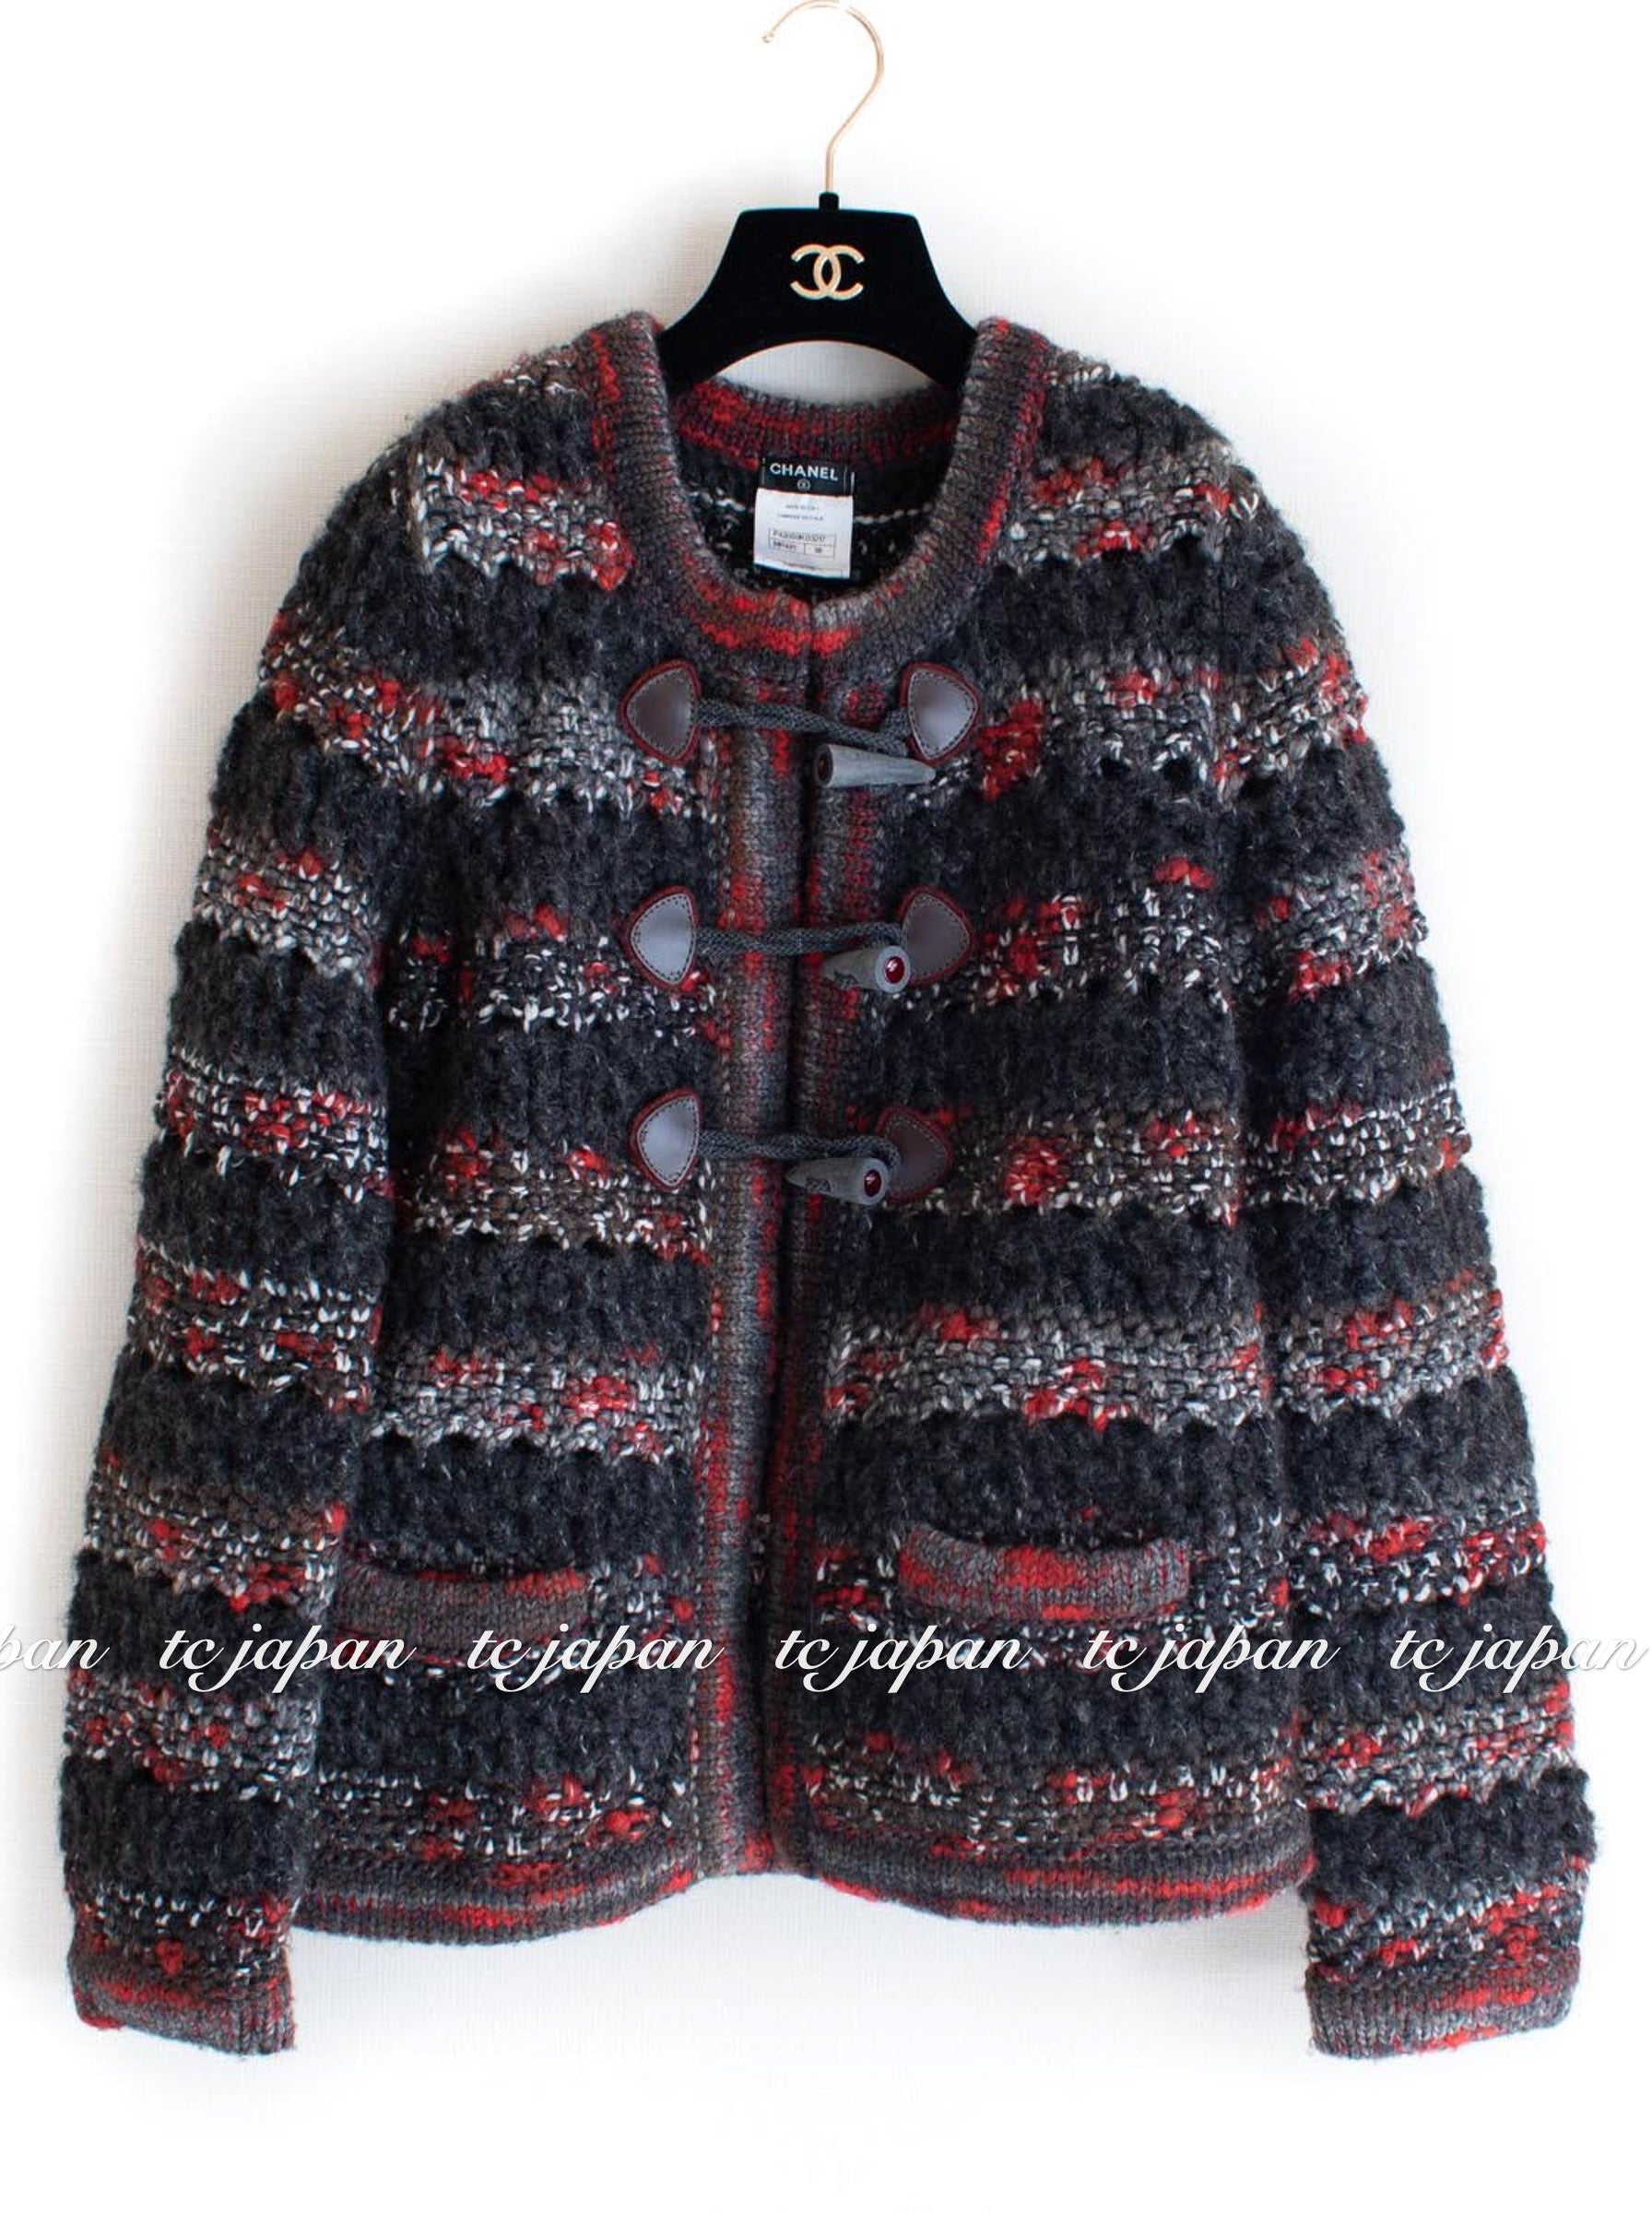 CHANEL 11A Charcoal Wool Cashmere Knit Cardigan coat 36 38 シャネル  チャコール・ウール・カシミア・カーディガン コート 即発